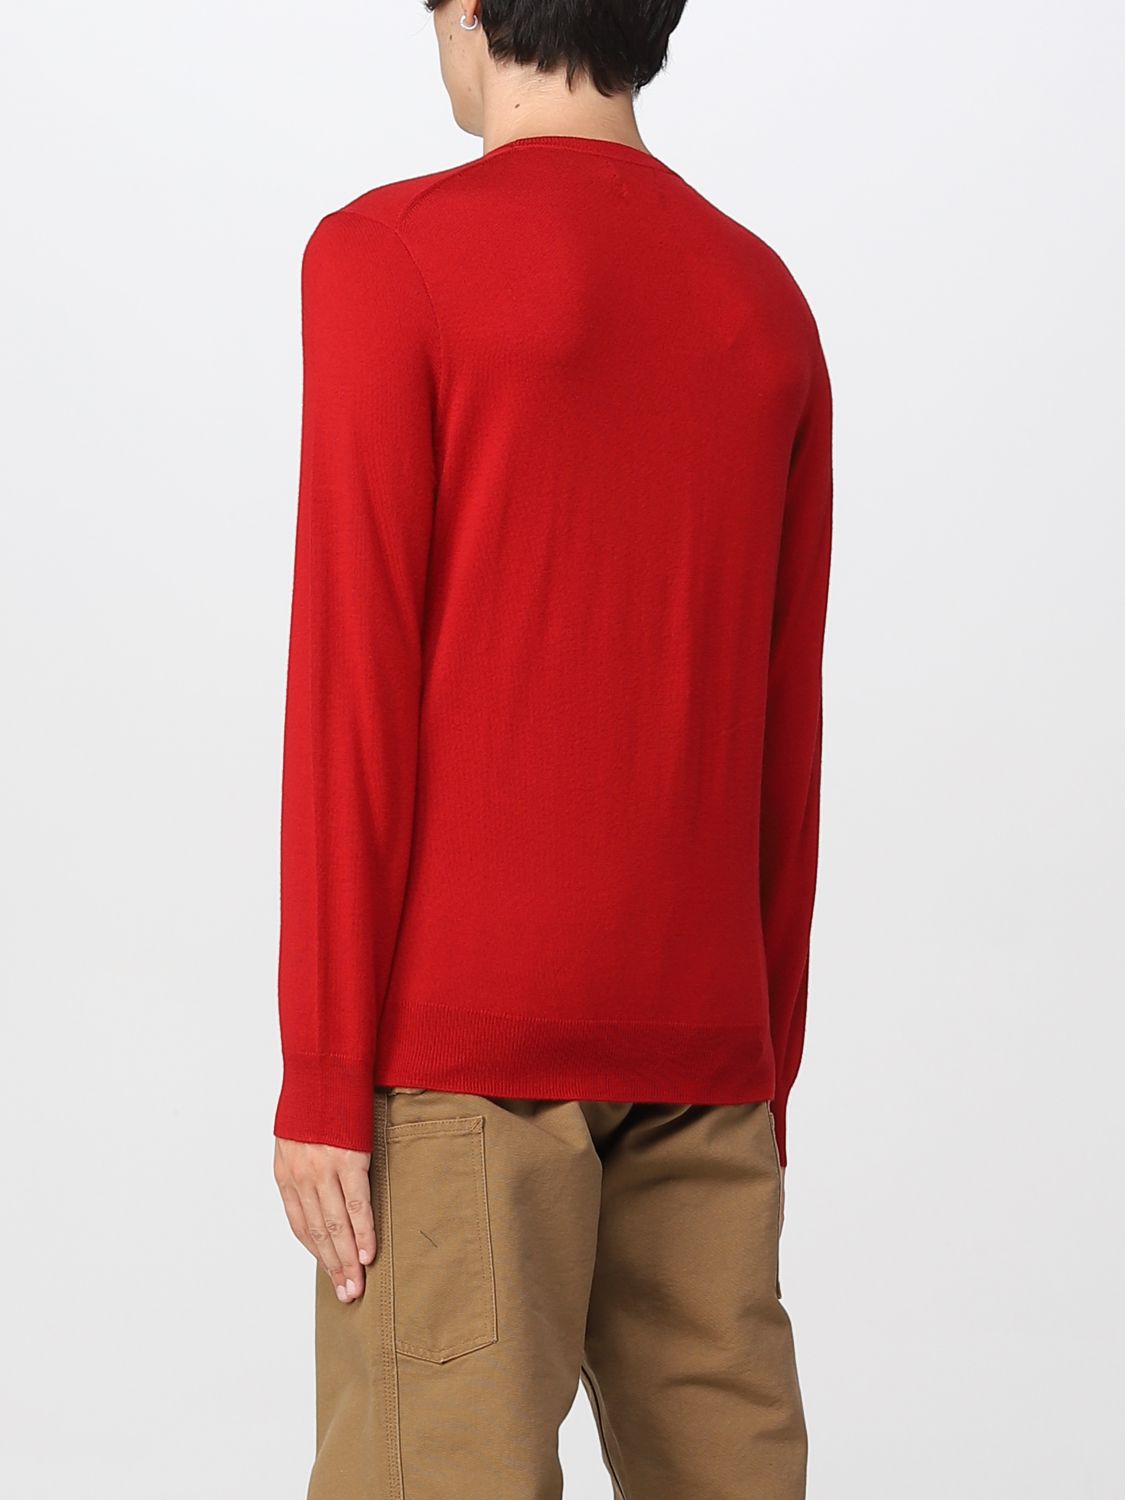 POLO RALPH LAUREN: sweater for man - Red | Polo Ralph Lauren sweater ...